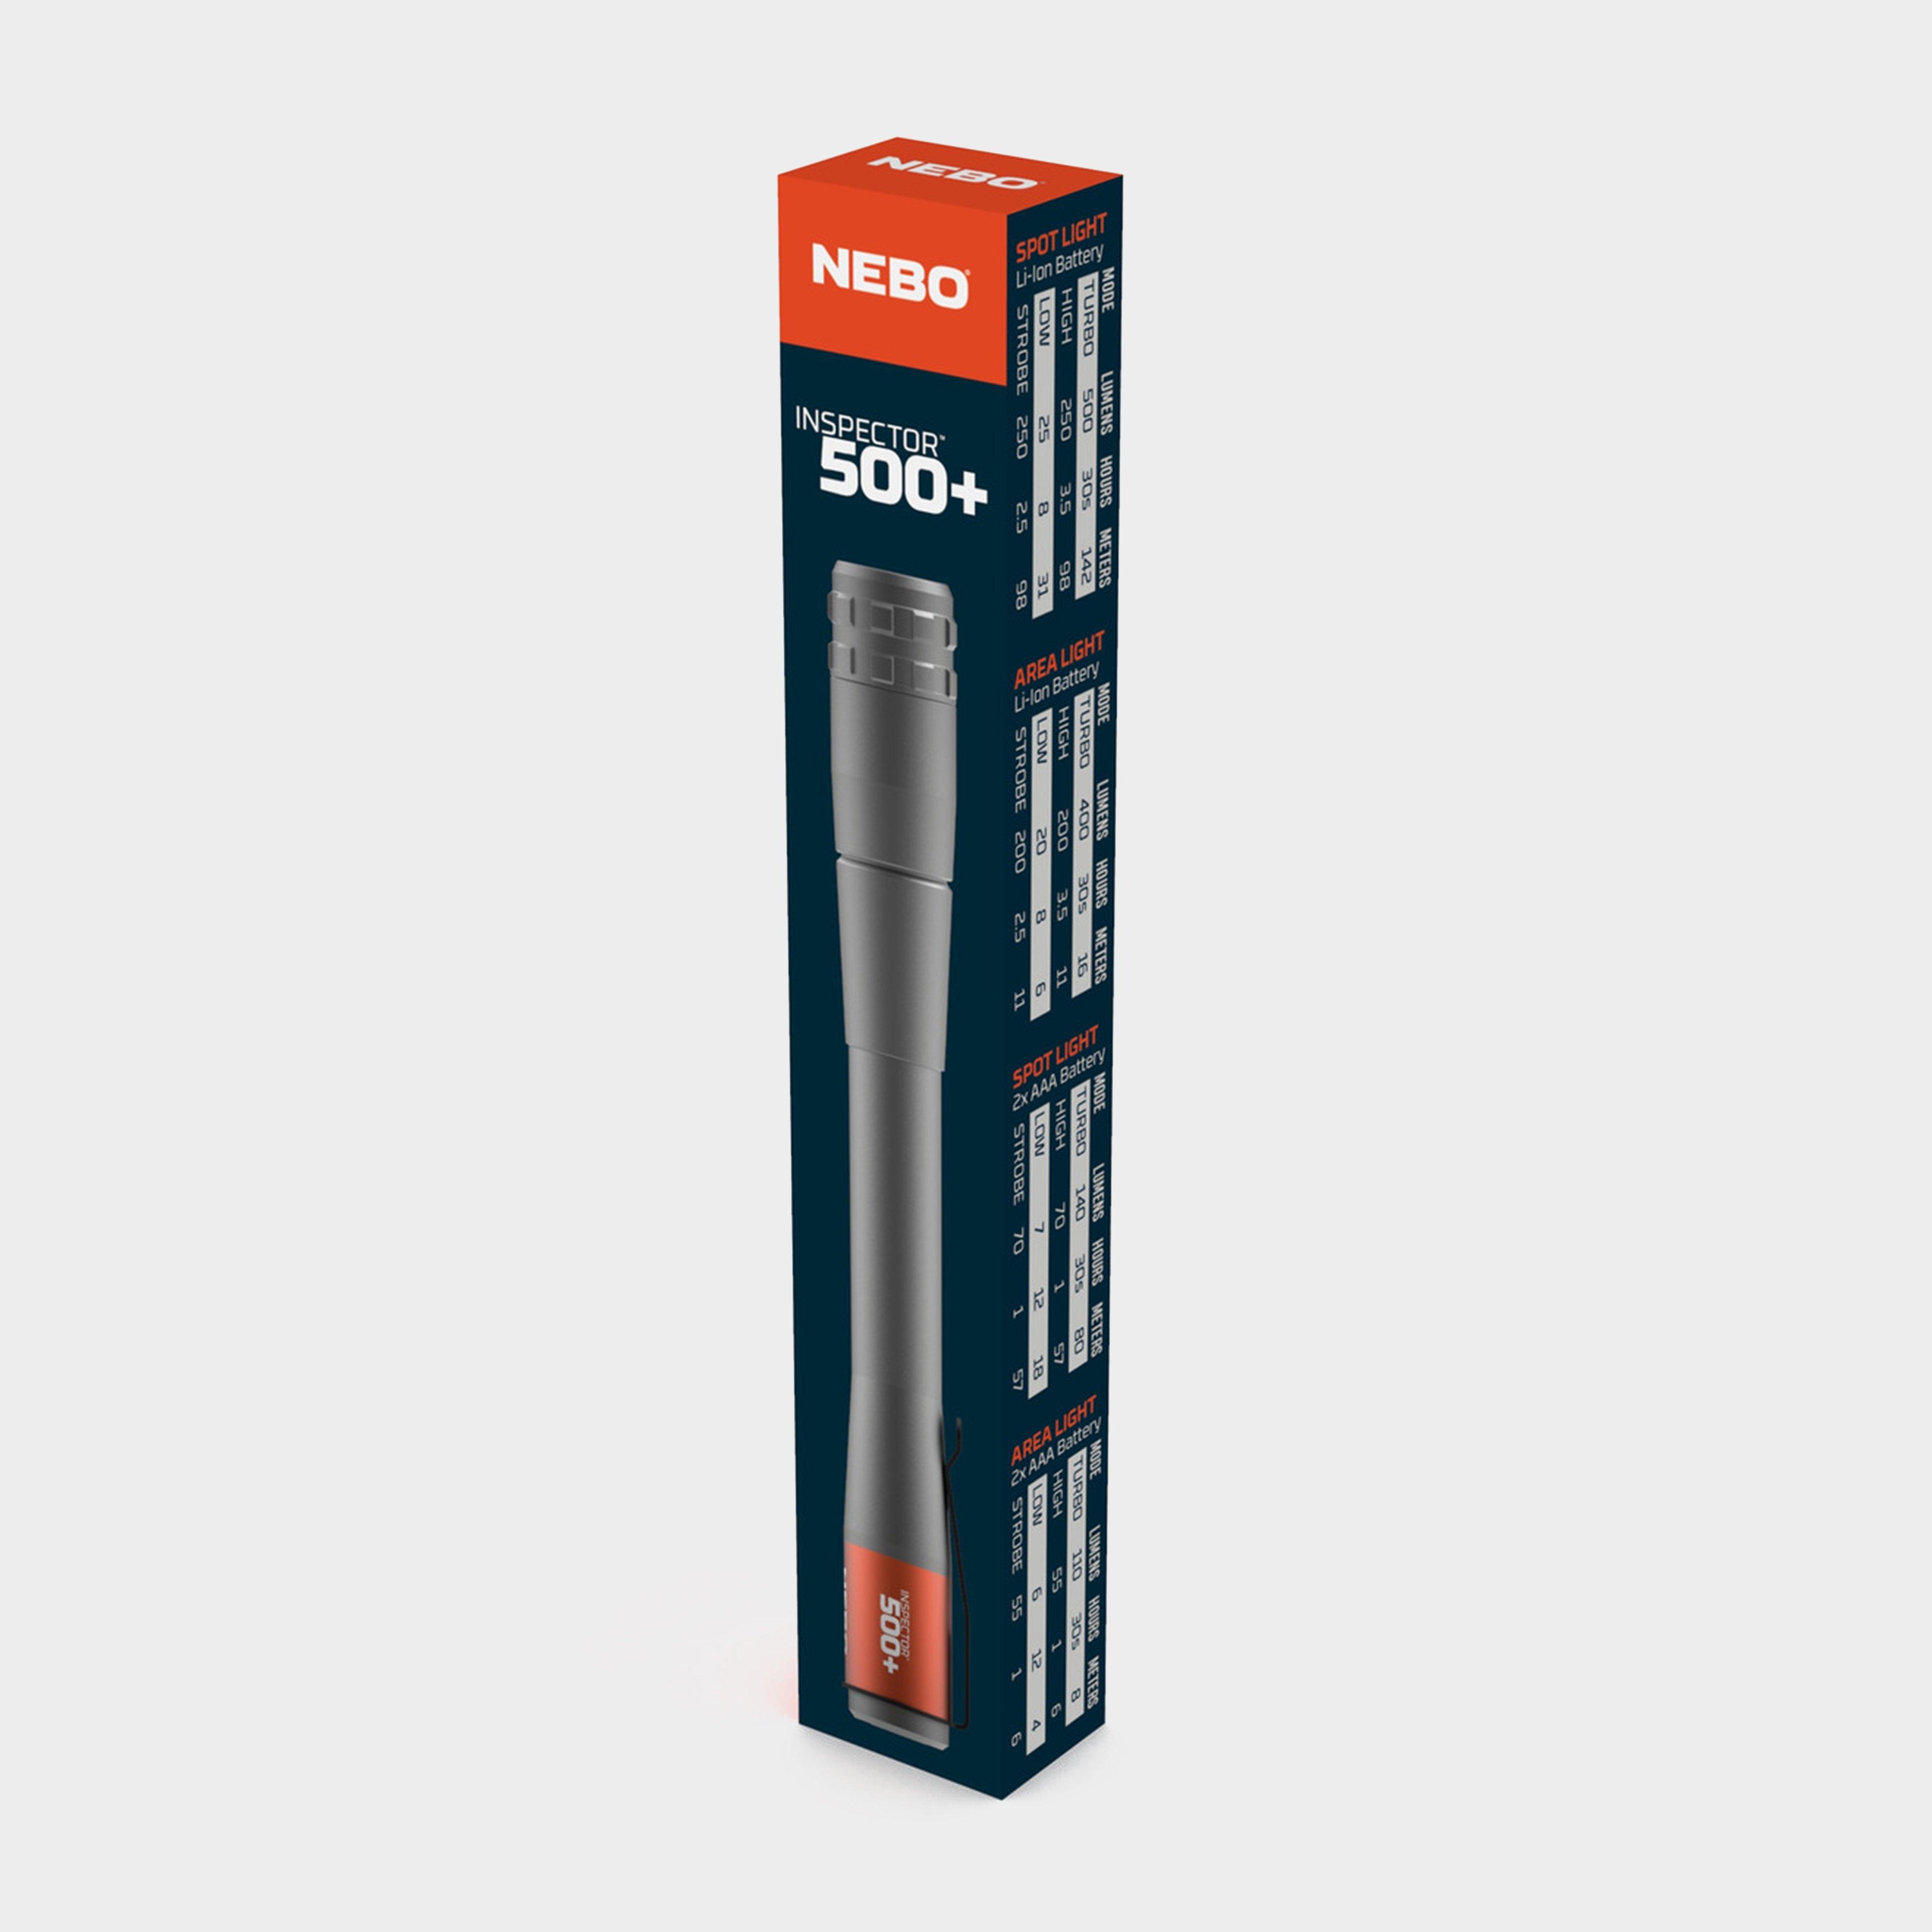 Nebo Inspector 500+ Rechargeable Led Flashlight - Grey/grey  Grey/grey